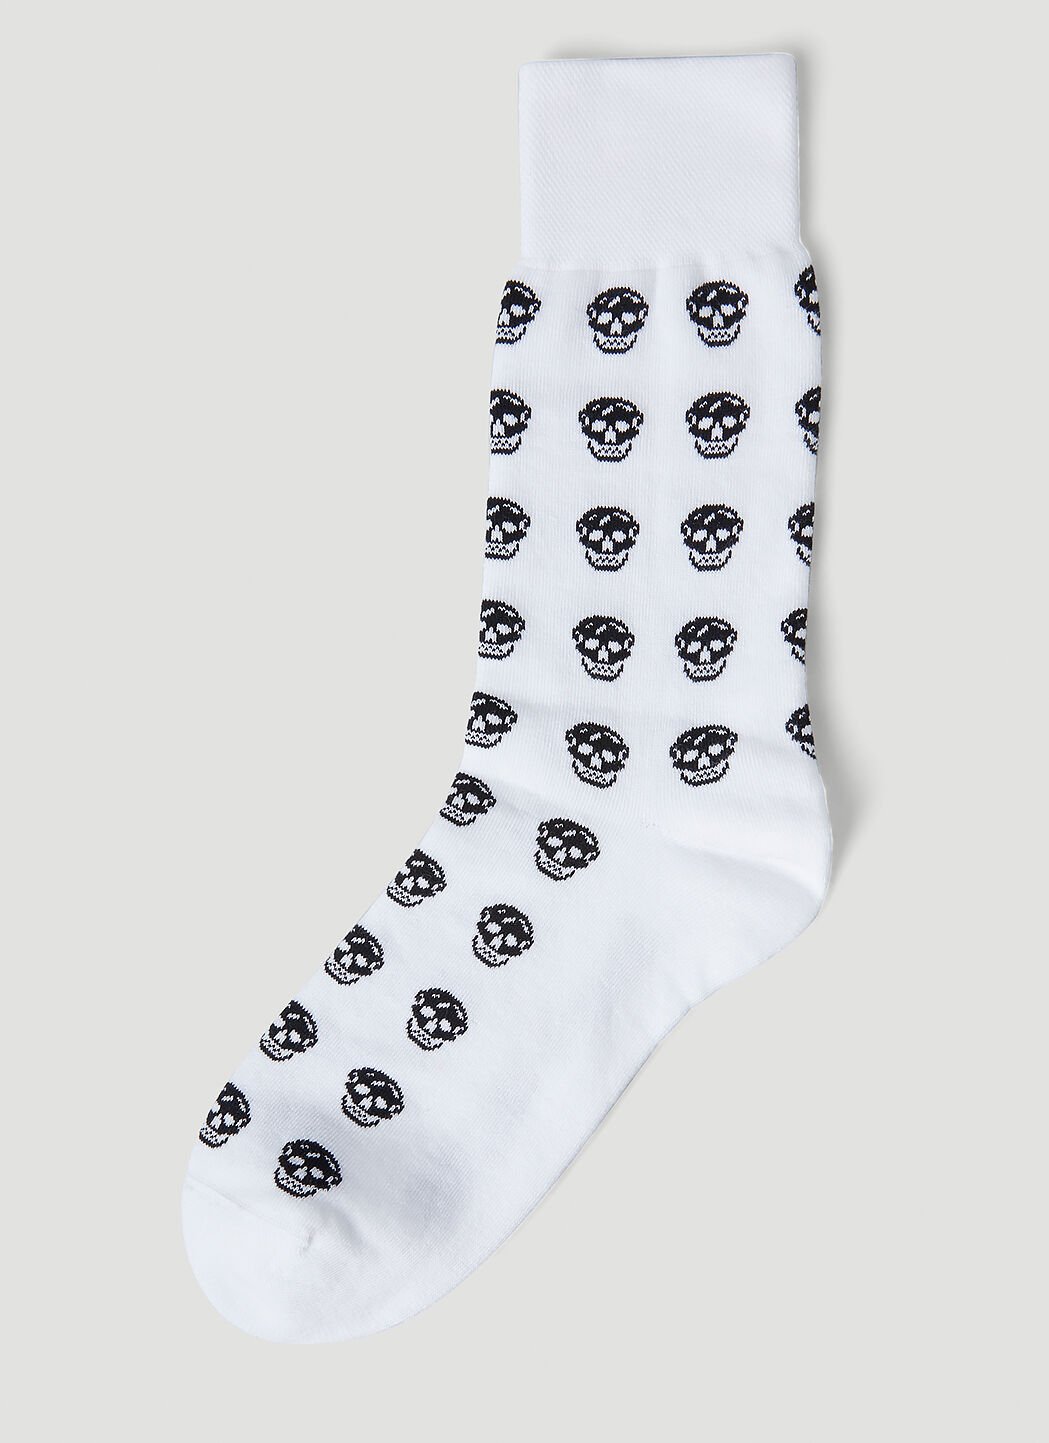 Kenzo Skull Motif Socks 黑色 knz0154035